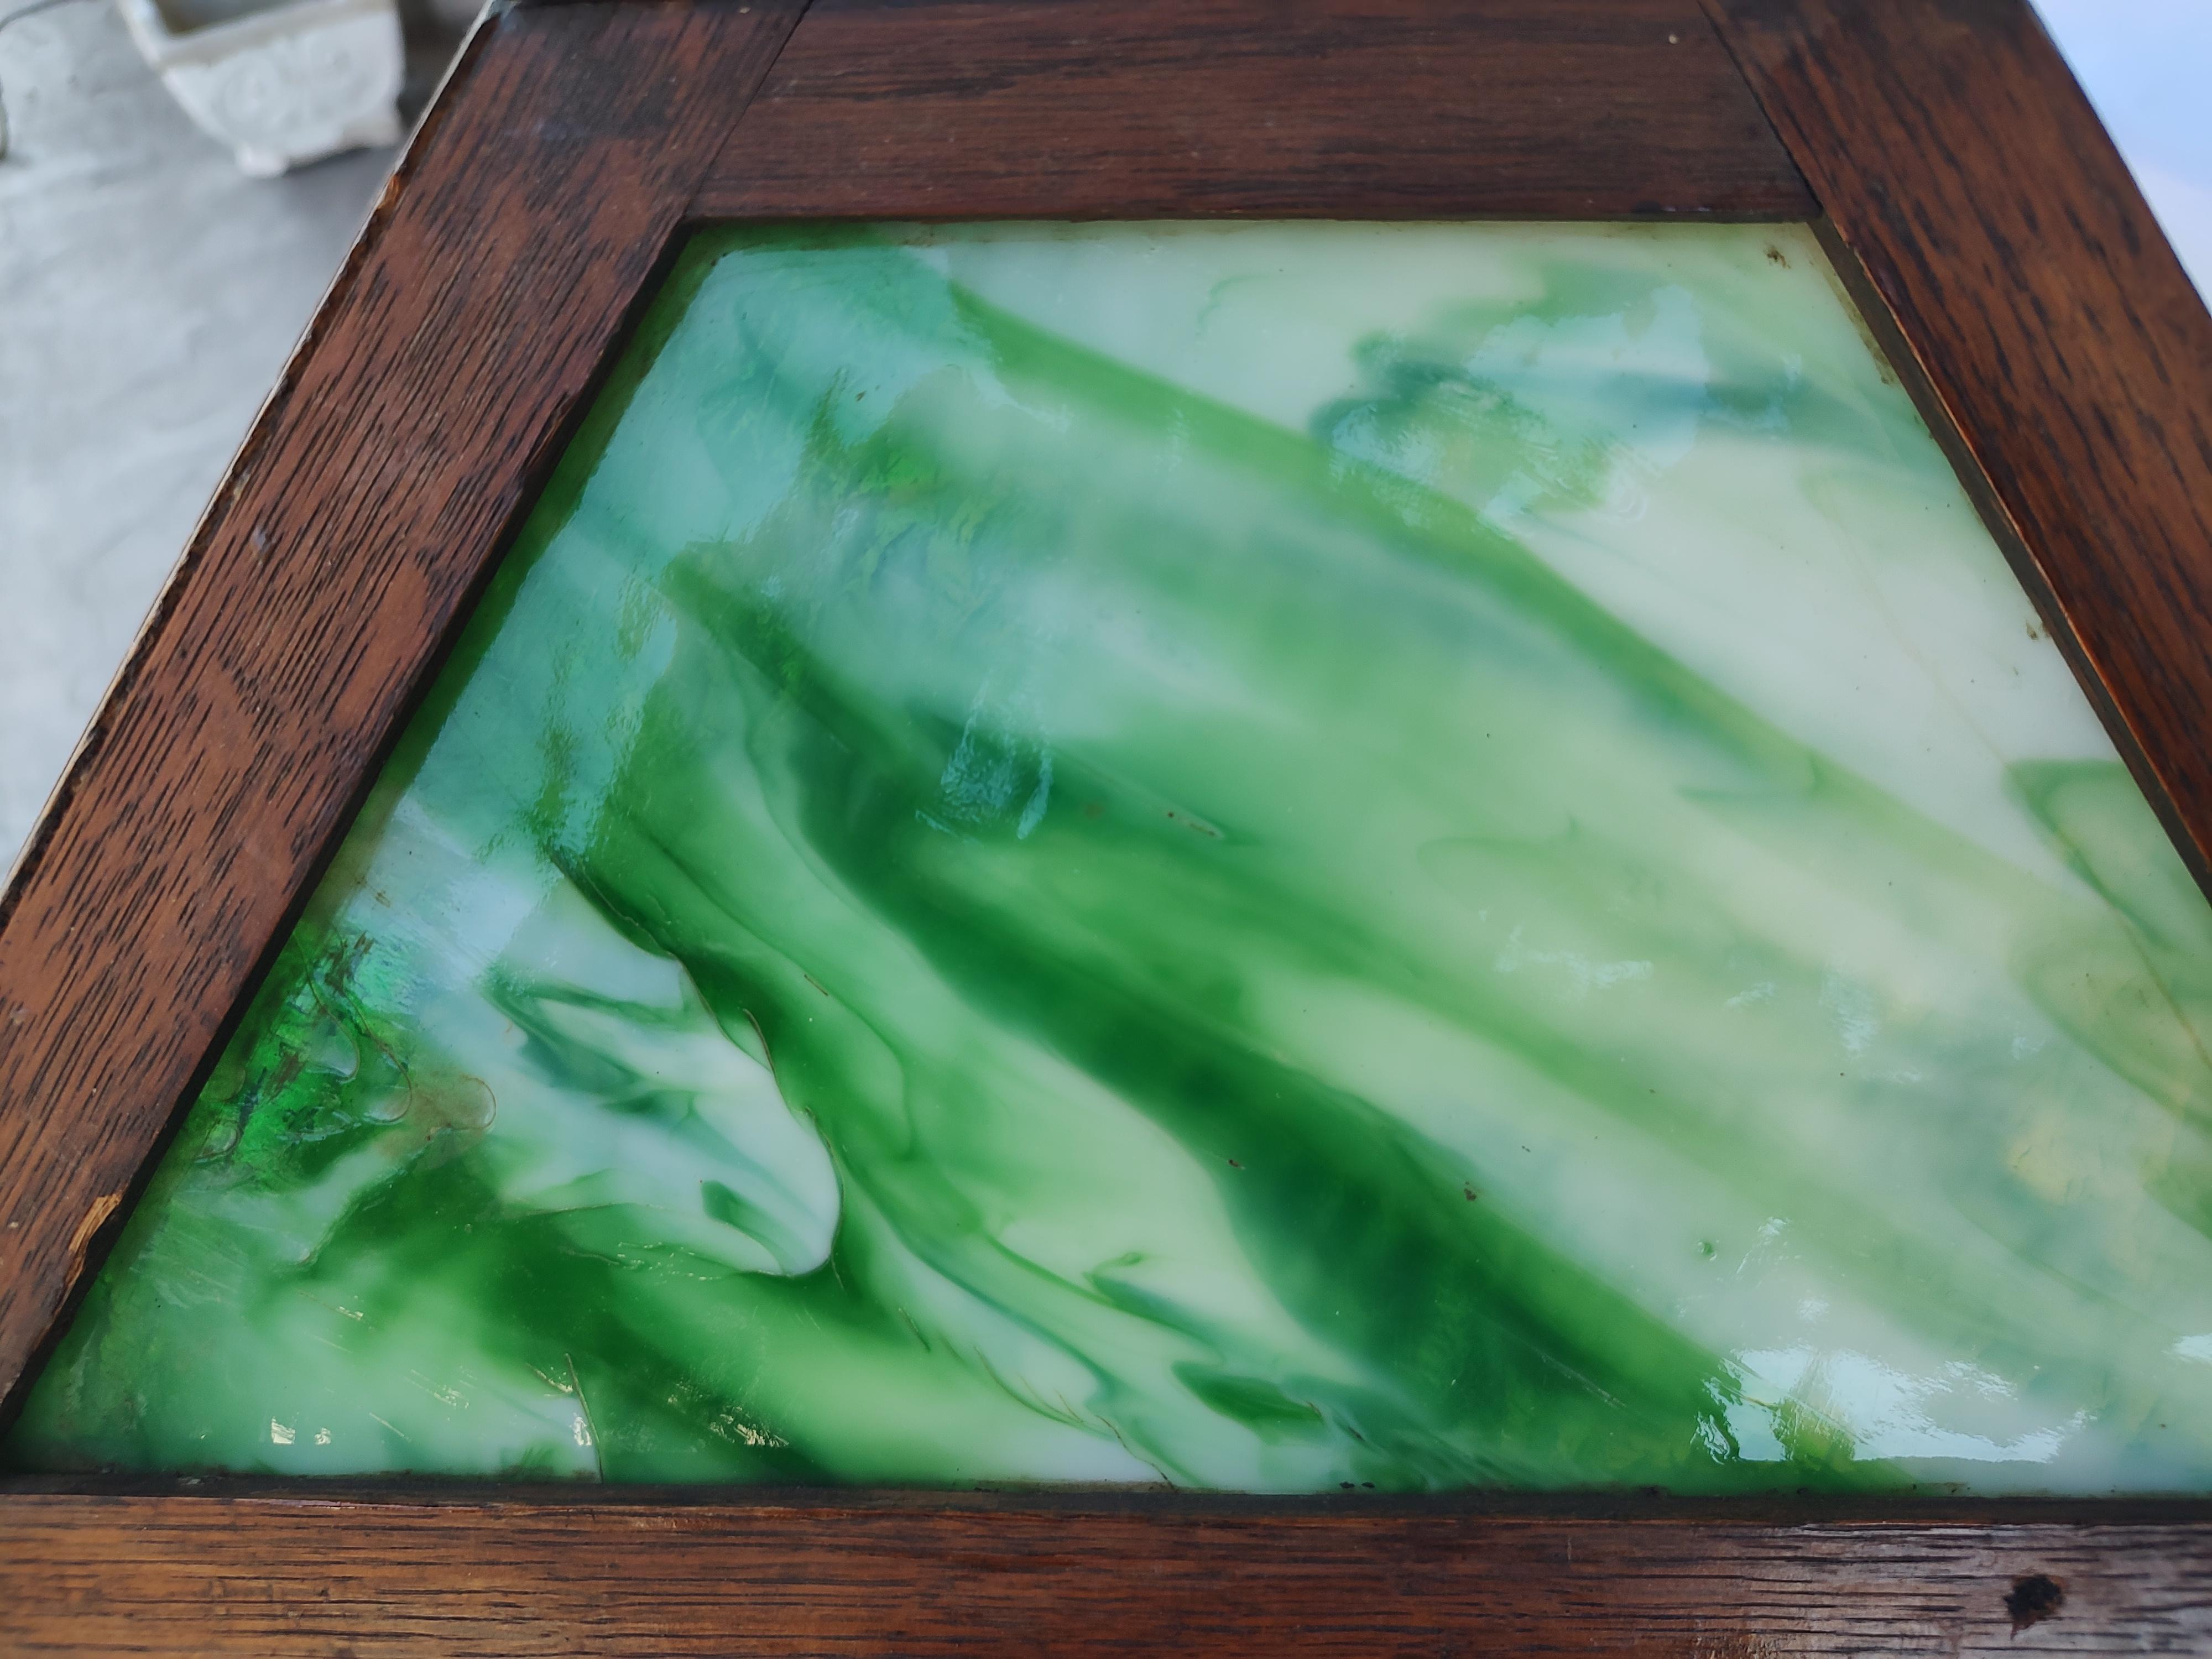 Beveled Arts & Crafts Mission Oak Table Lamp with Green Slag Glass